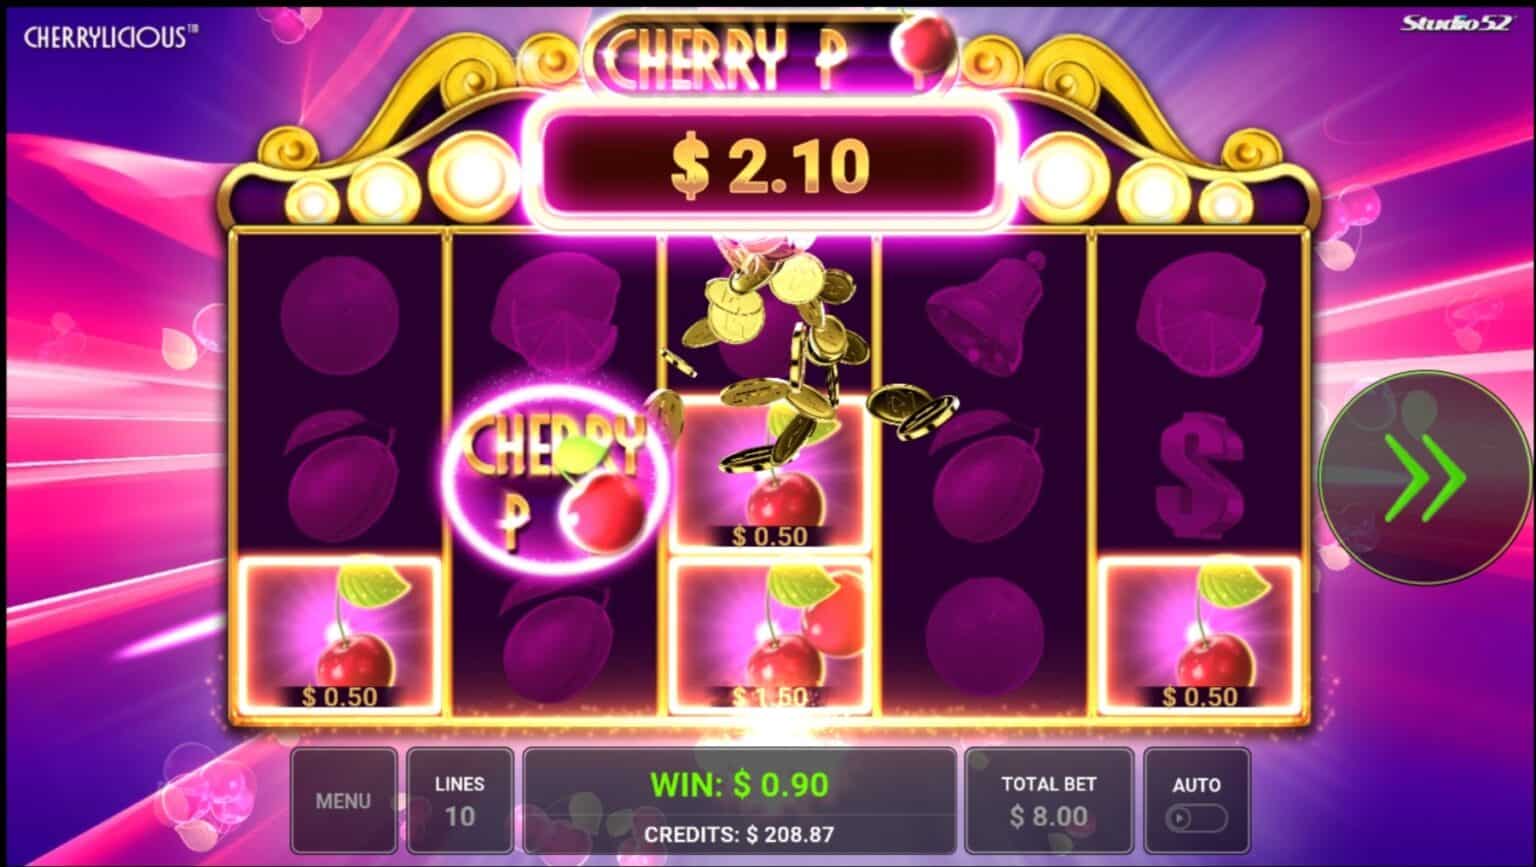 Cherrylicious At BetMGM Online Casino Is One Sweet Slot